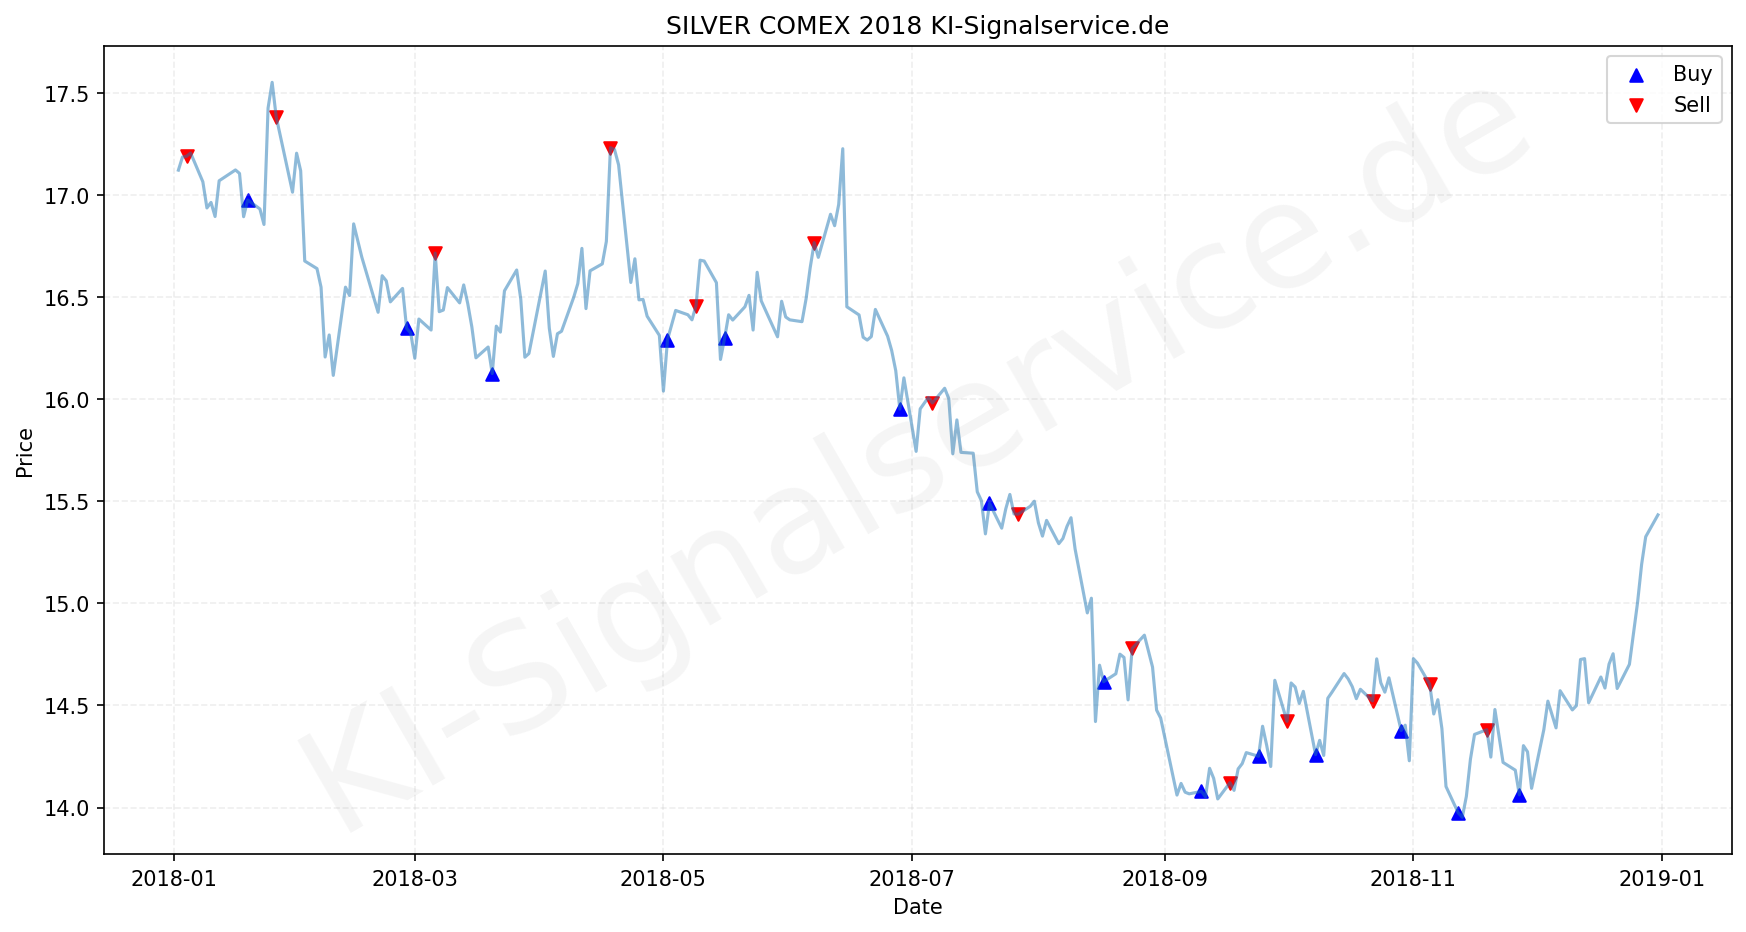 Silver Chart - KI Tradingsignale 2018